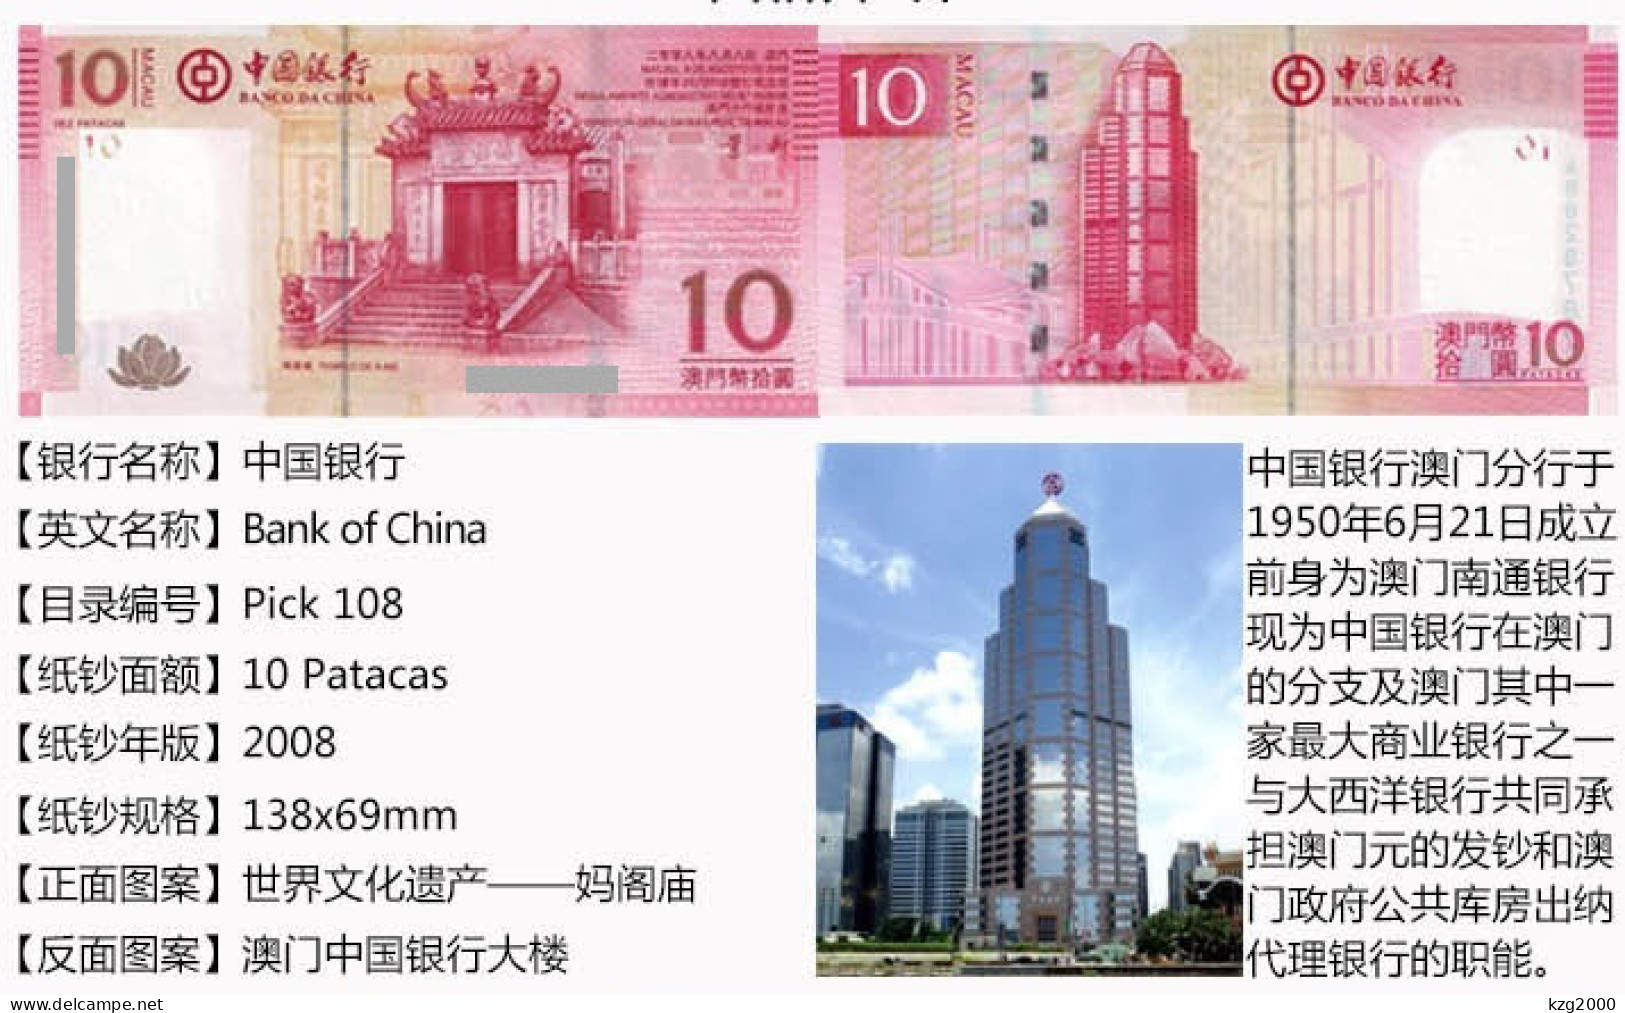 Macau Macao Paper Money 2008-2014  Banknotes 10 Dollars BOC Bank UNC Banknote - Macau